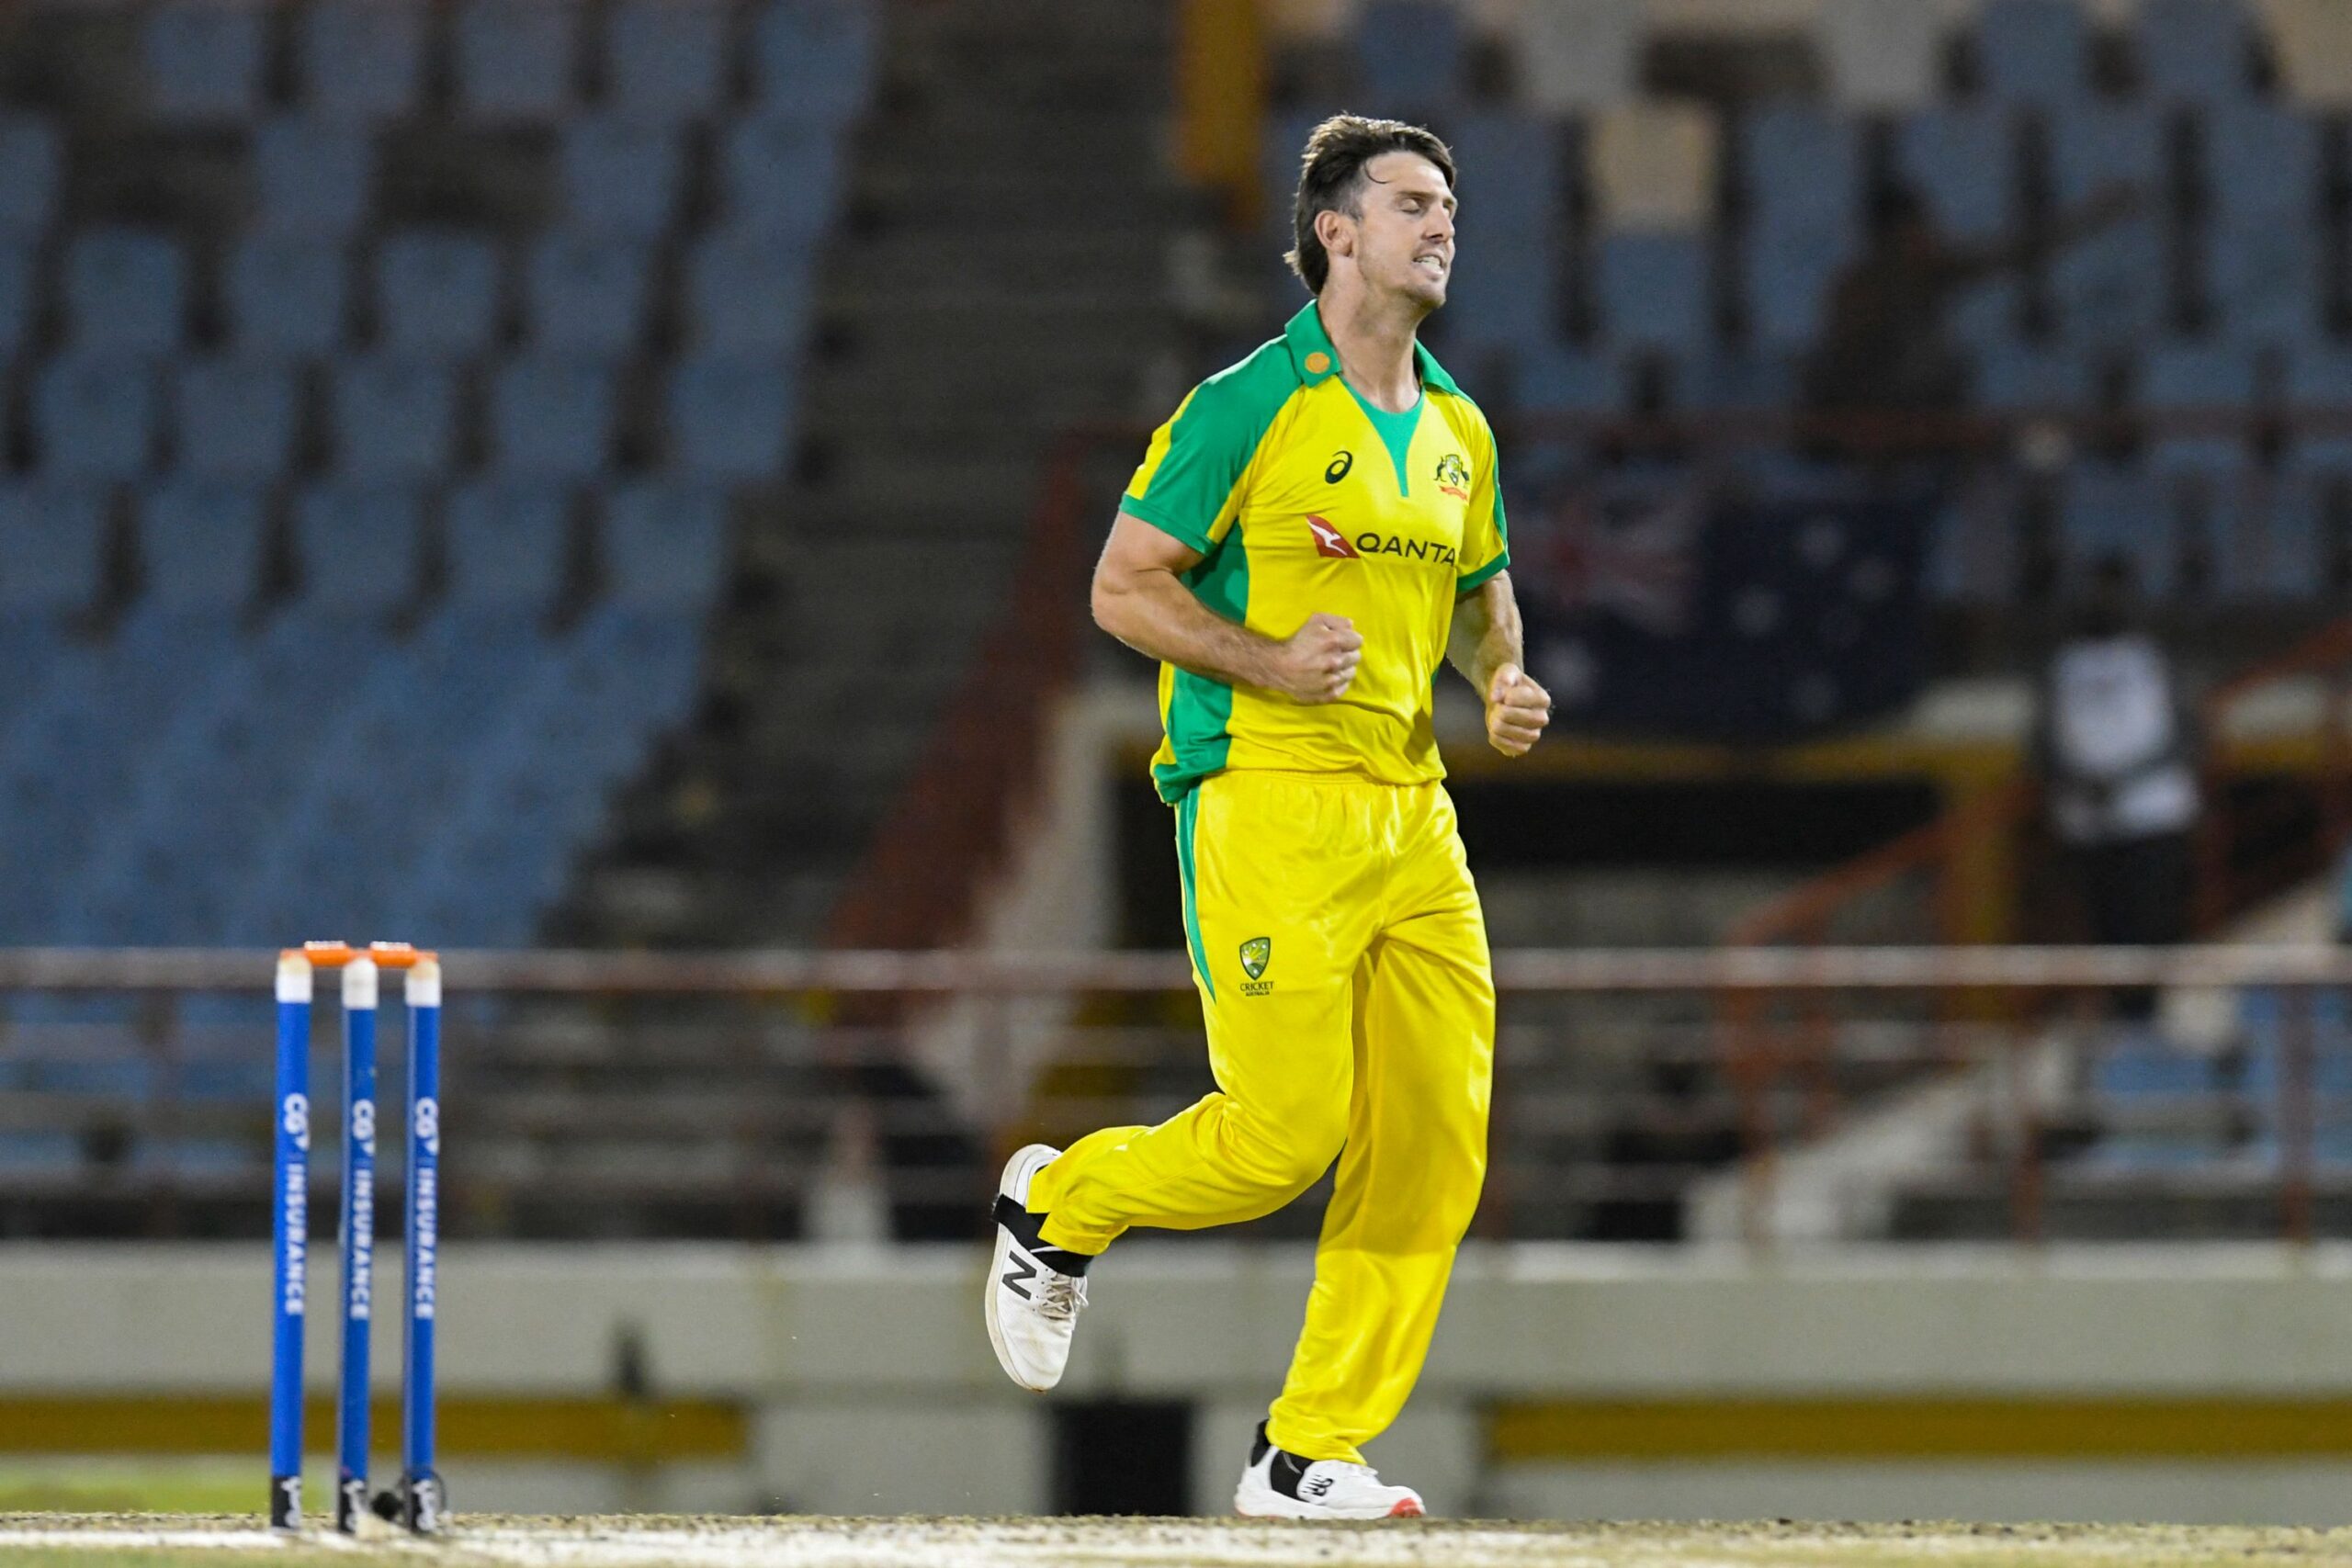 PAK vs AUS: Matt Renshaw Joins Australia's White-Ball Squad In Pakistan As Batting Cover